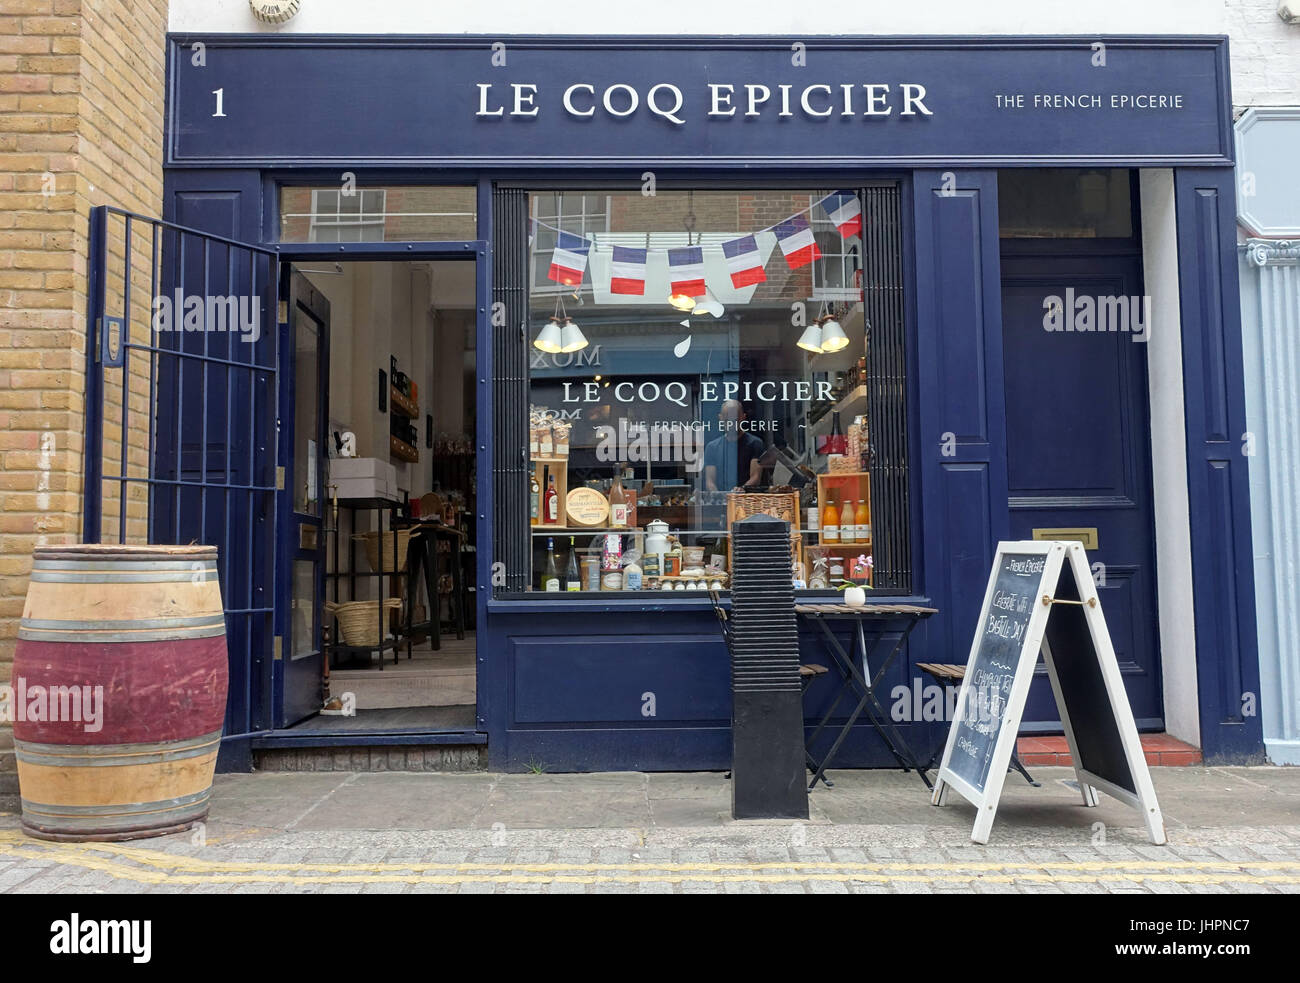 Le Coq Epicier französische Feinkost in Islington, London Stockfoto